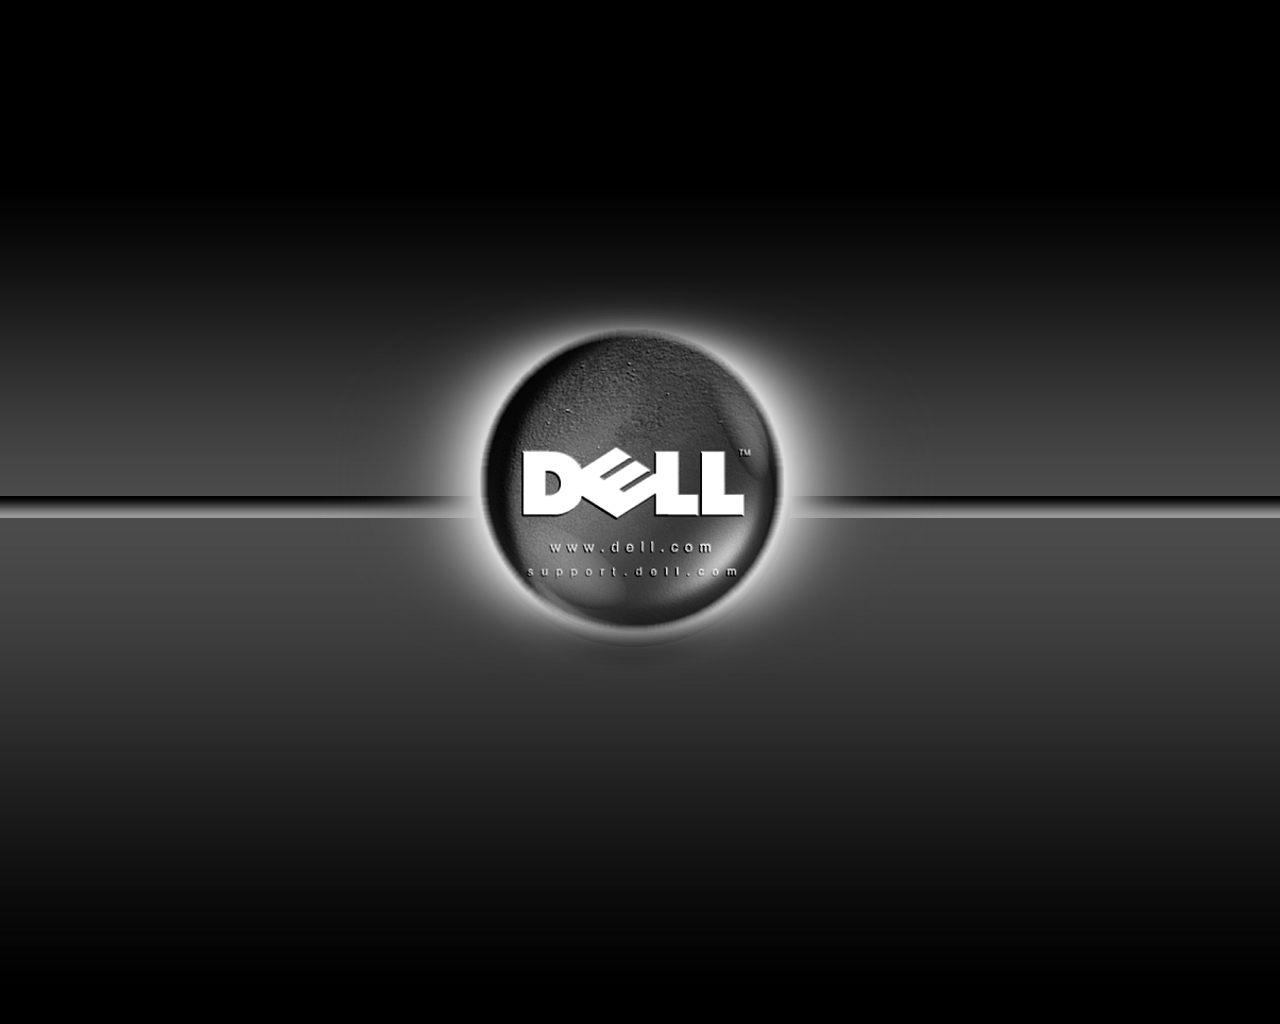 Dell HD Wallpaper